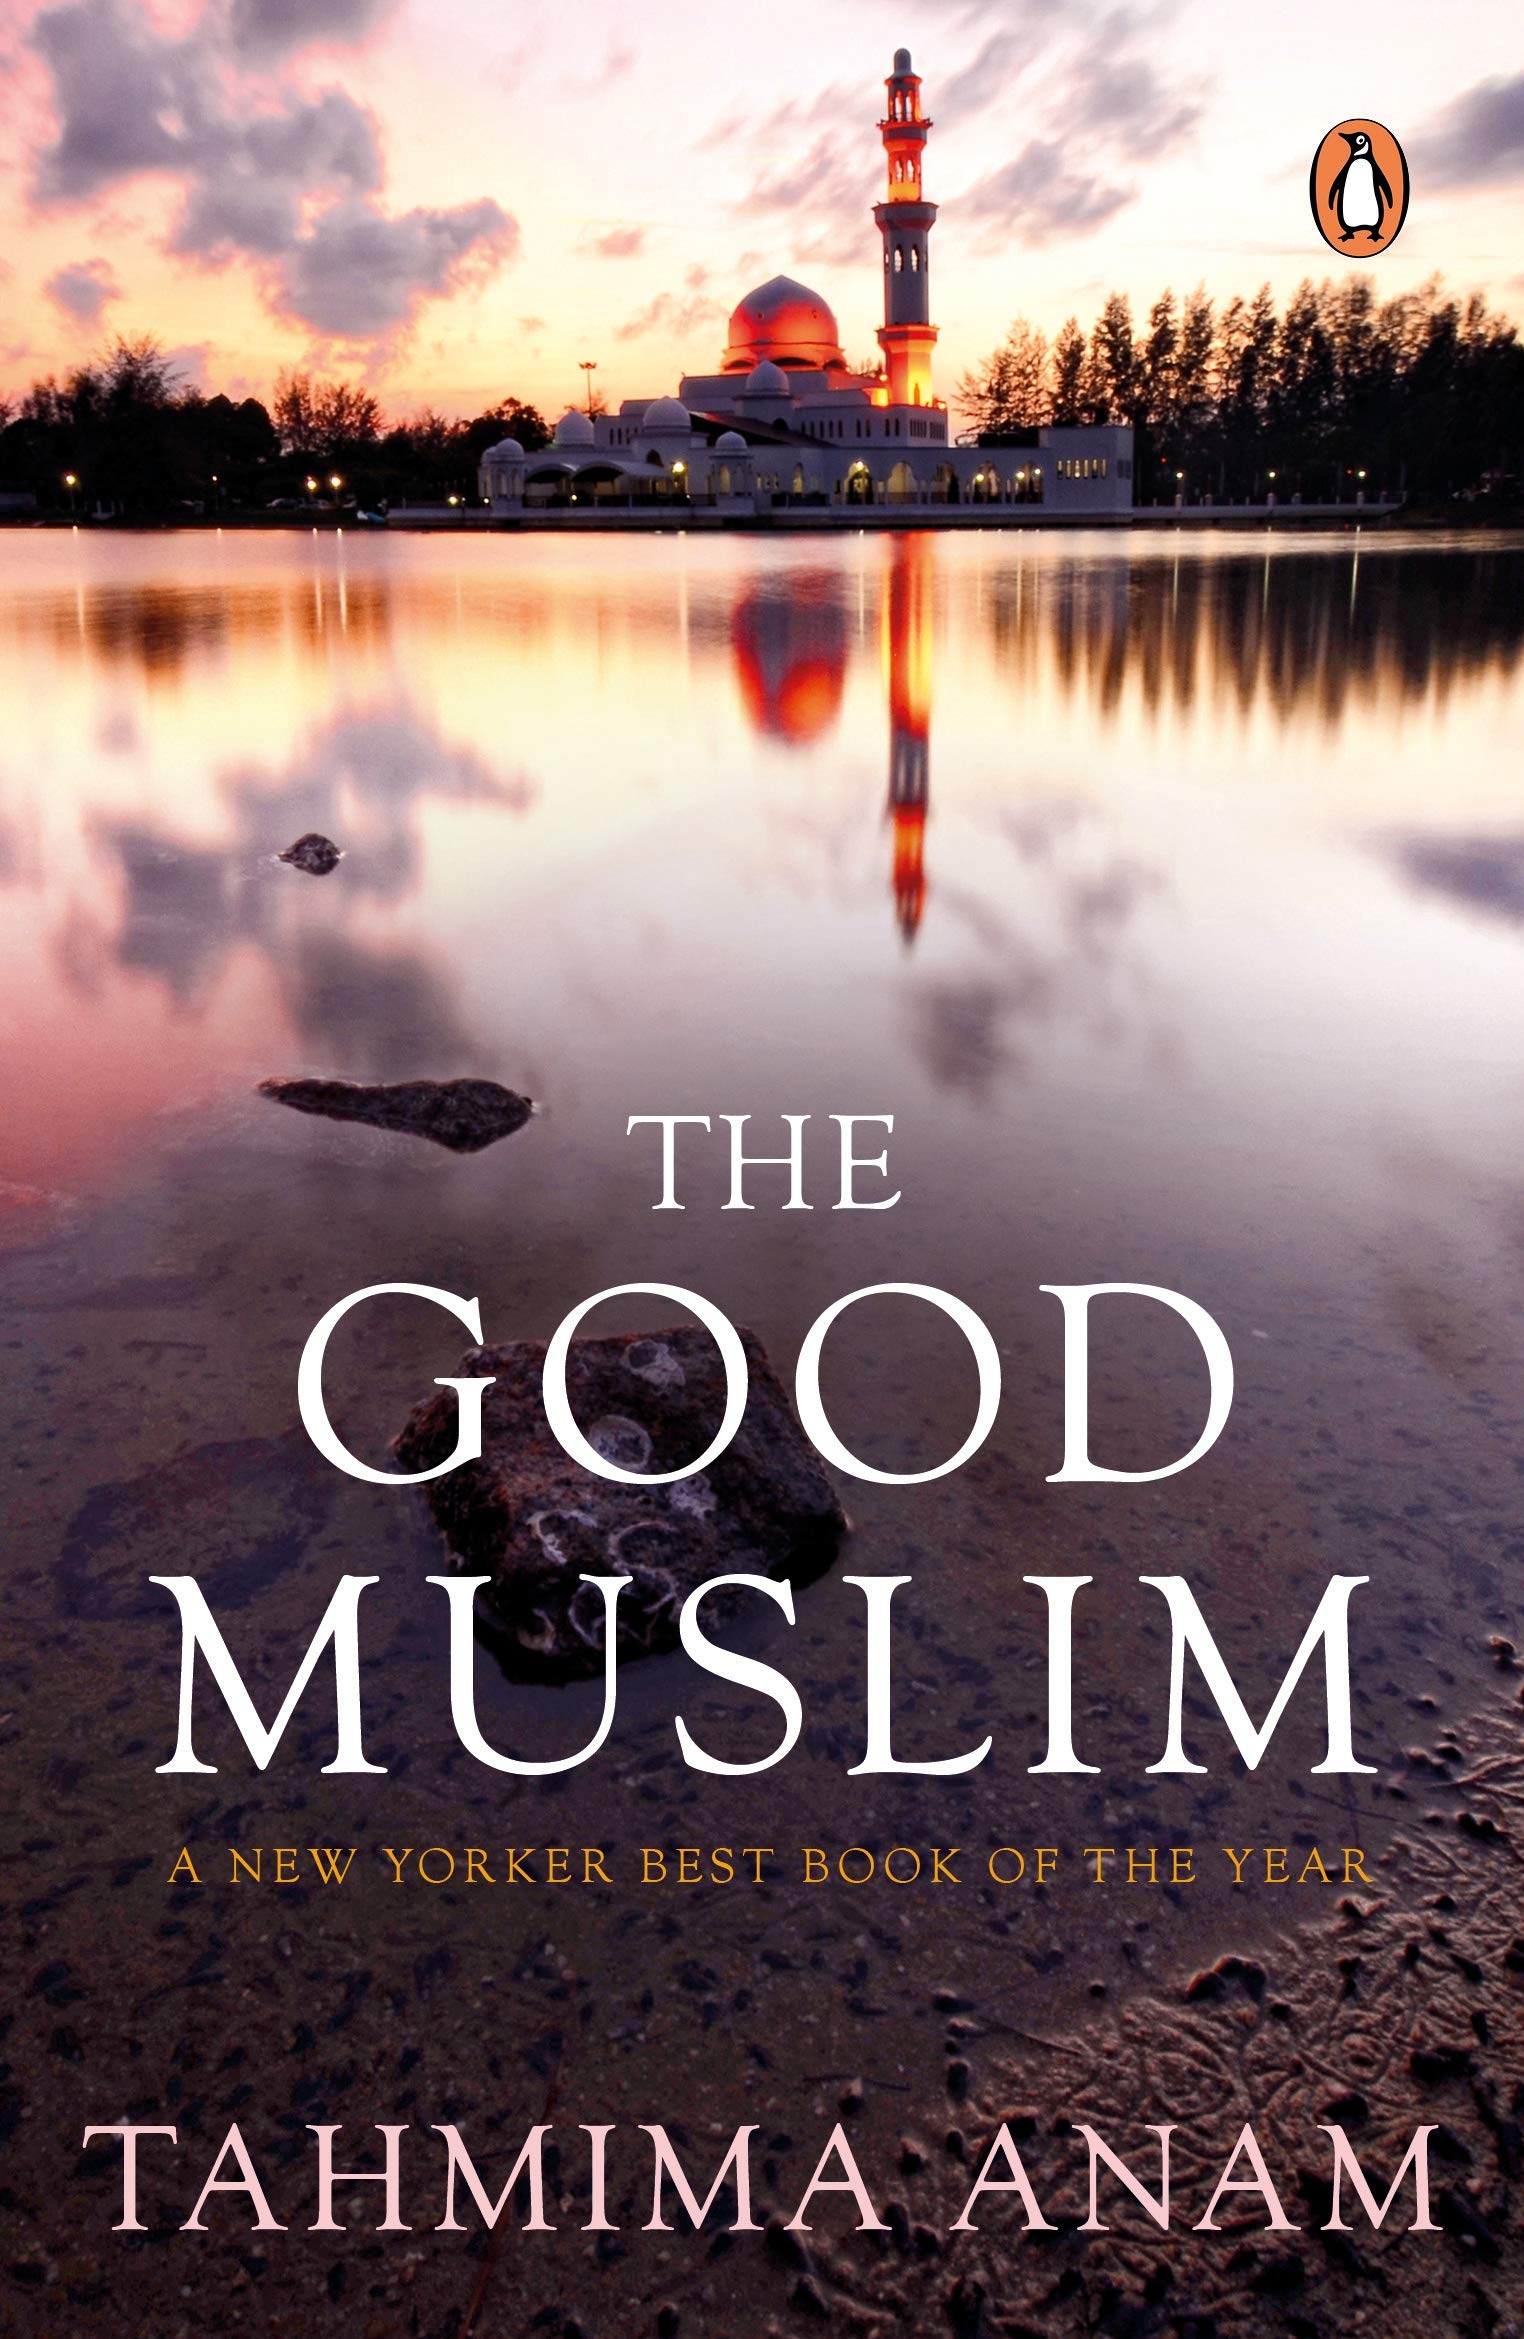 THE GOOD MUSLIM